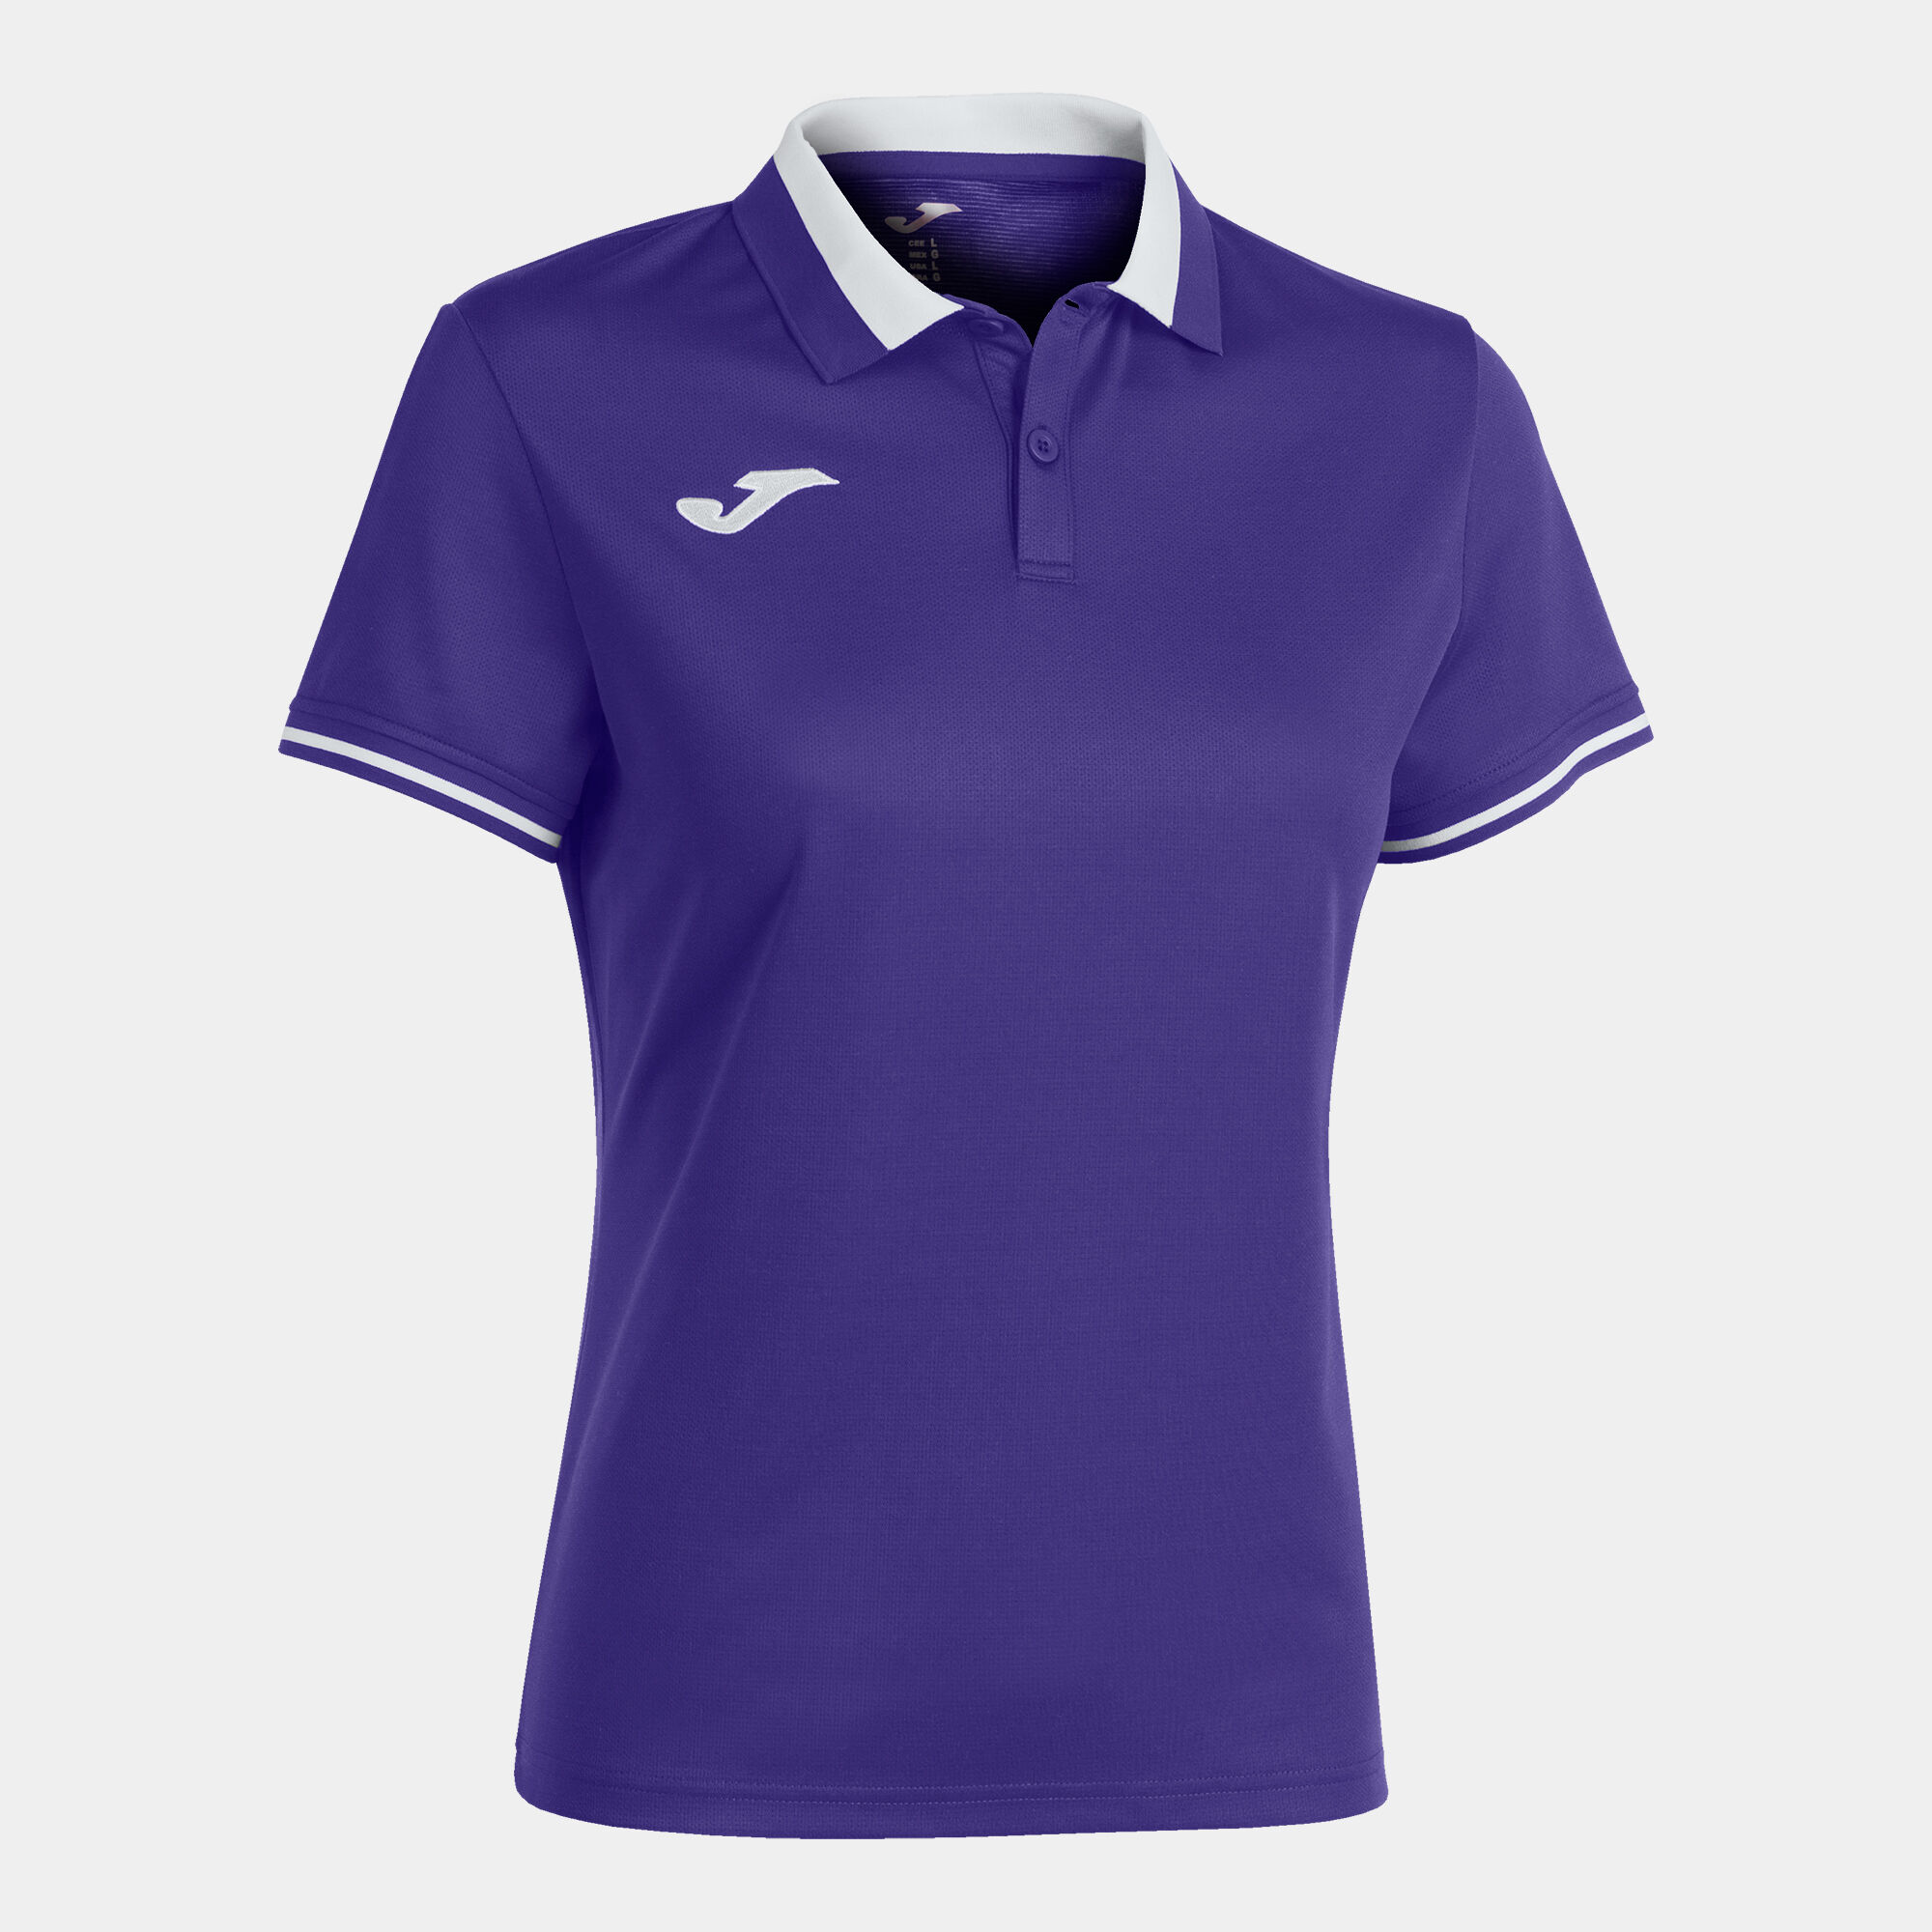 Polo shirt short-sleeve woman Championship VI purple white